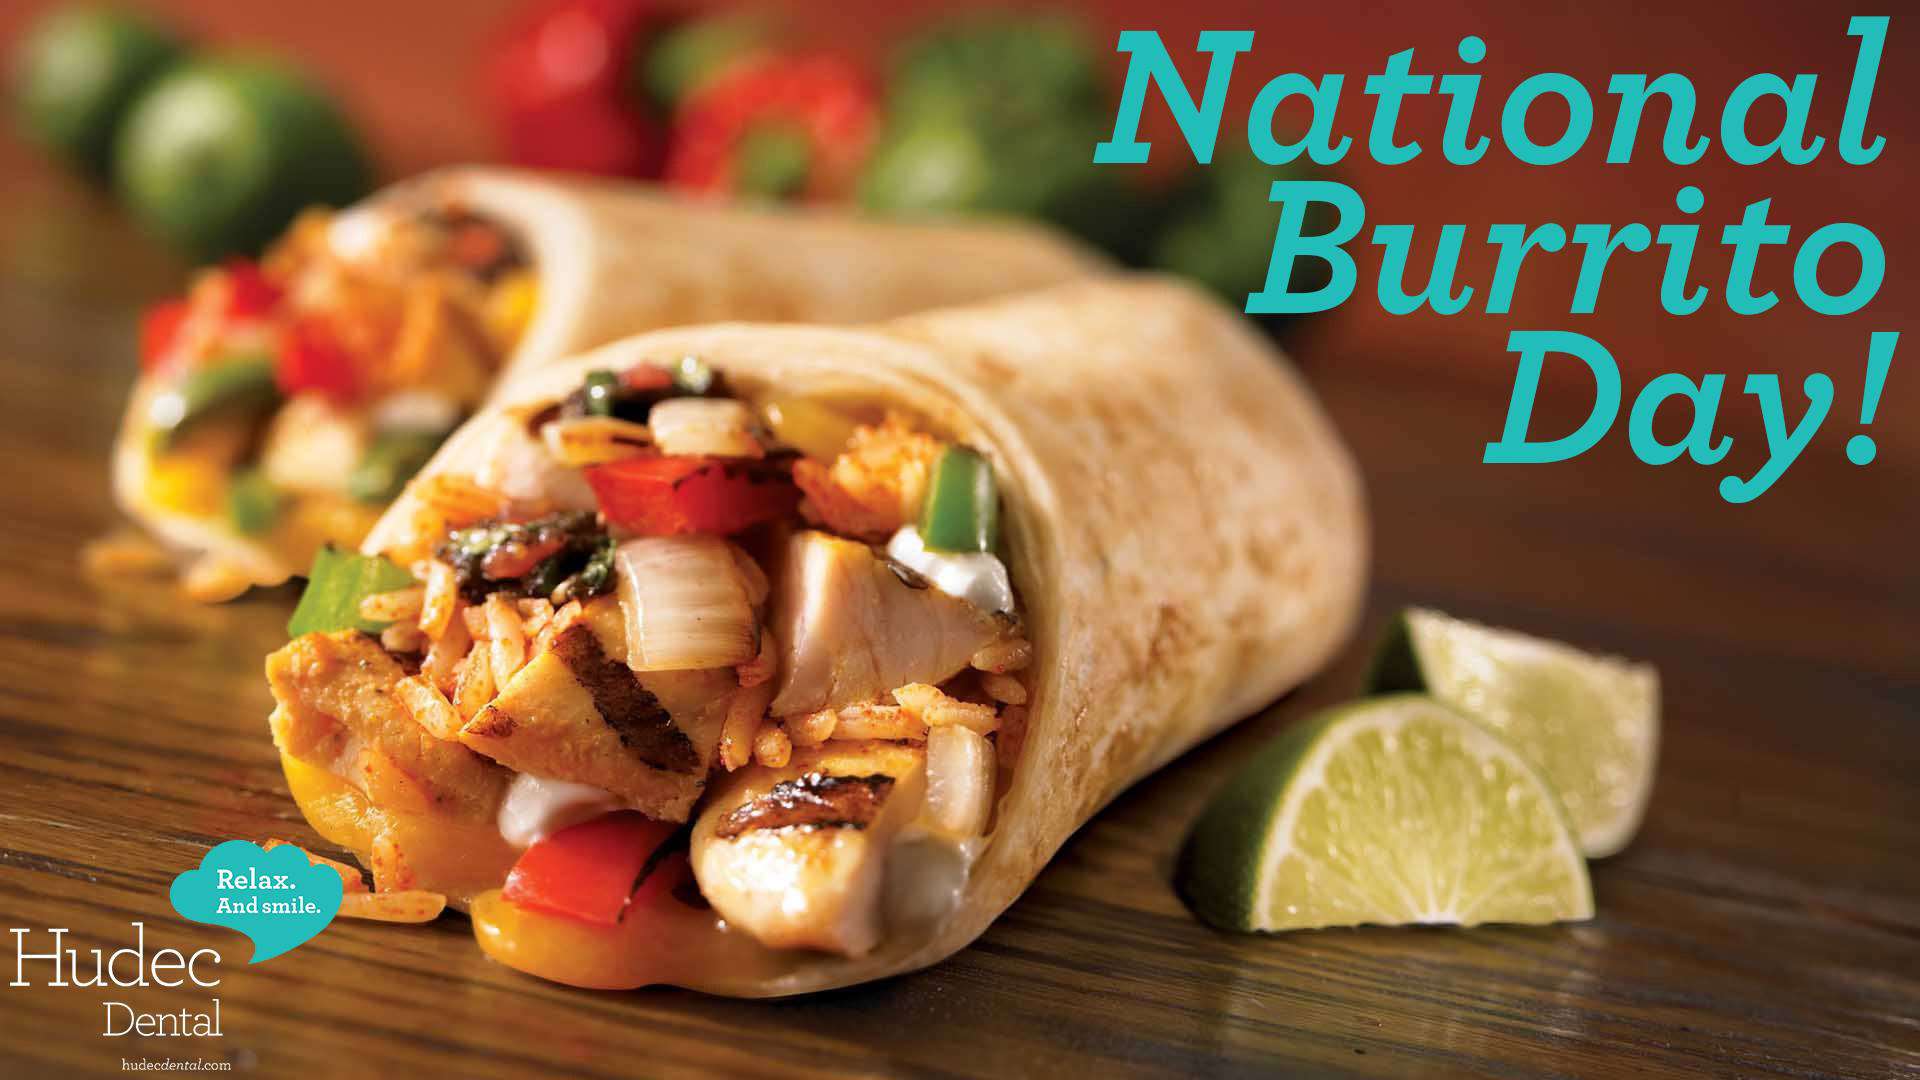 National Burrito Day Wishes